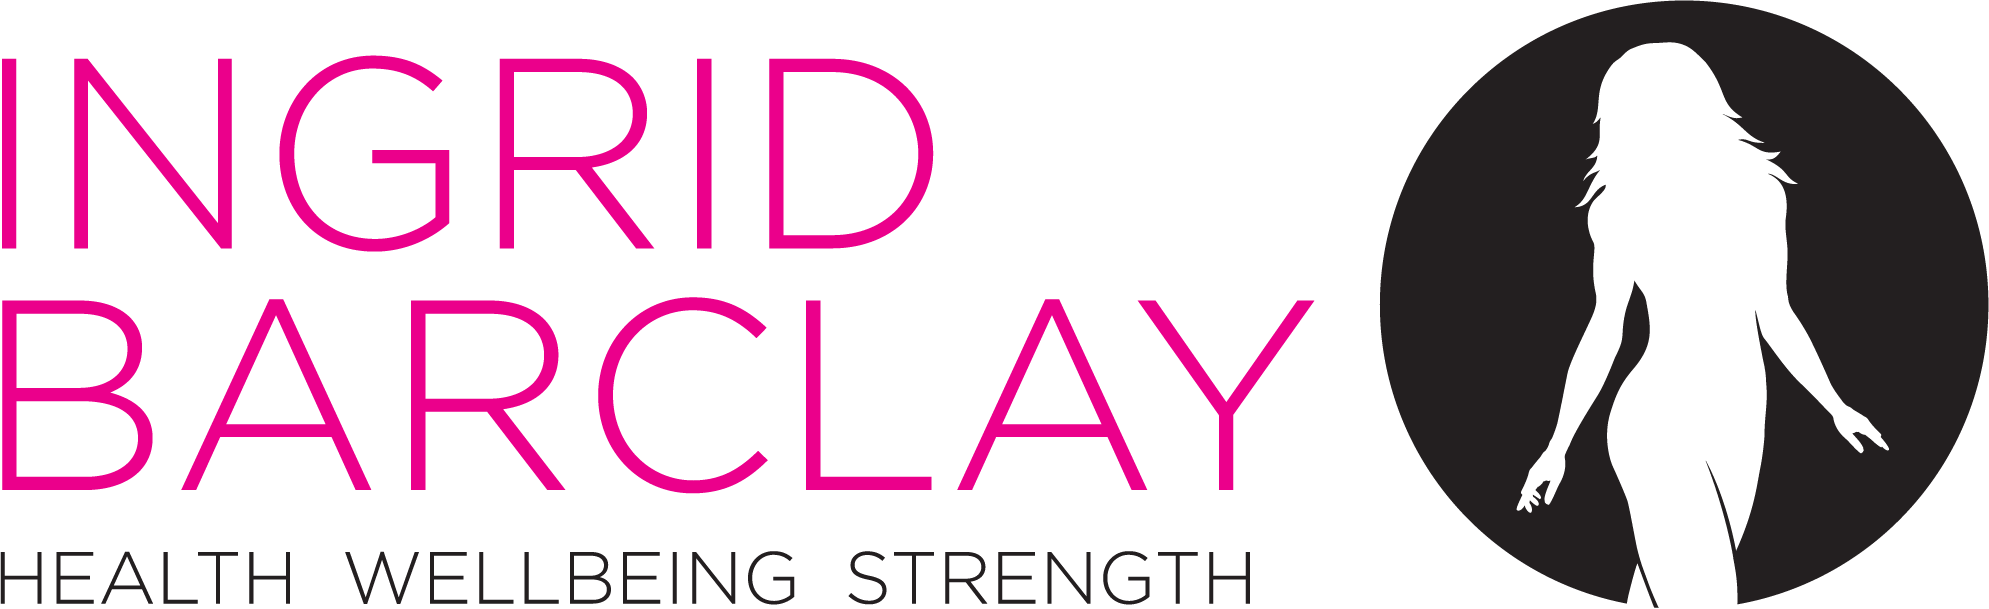 ingrid barclay logo